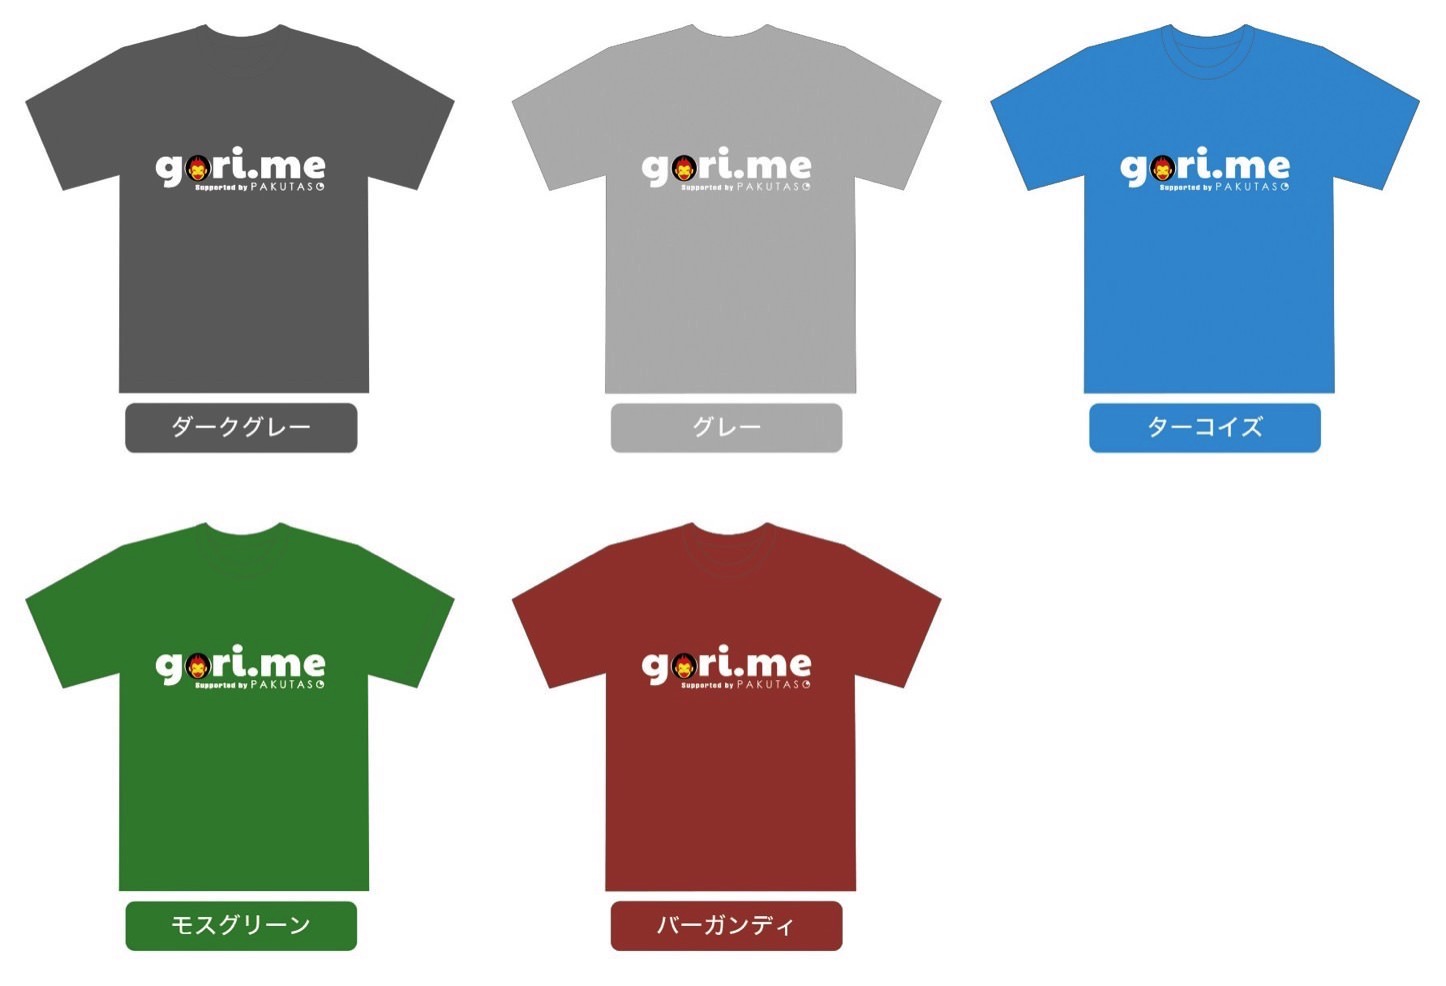 Gorime-Pakutaso-Collaboration-T-shirt-10.jpg